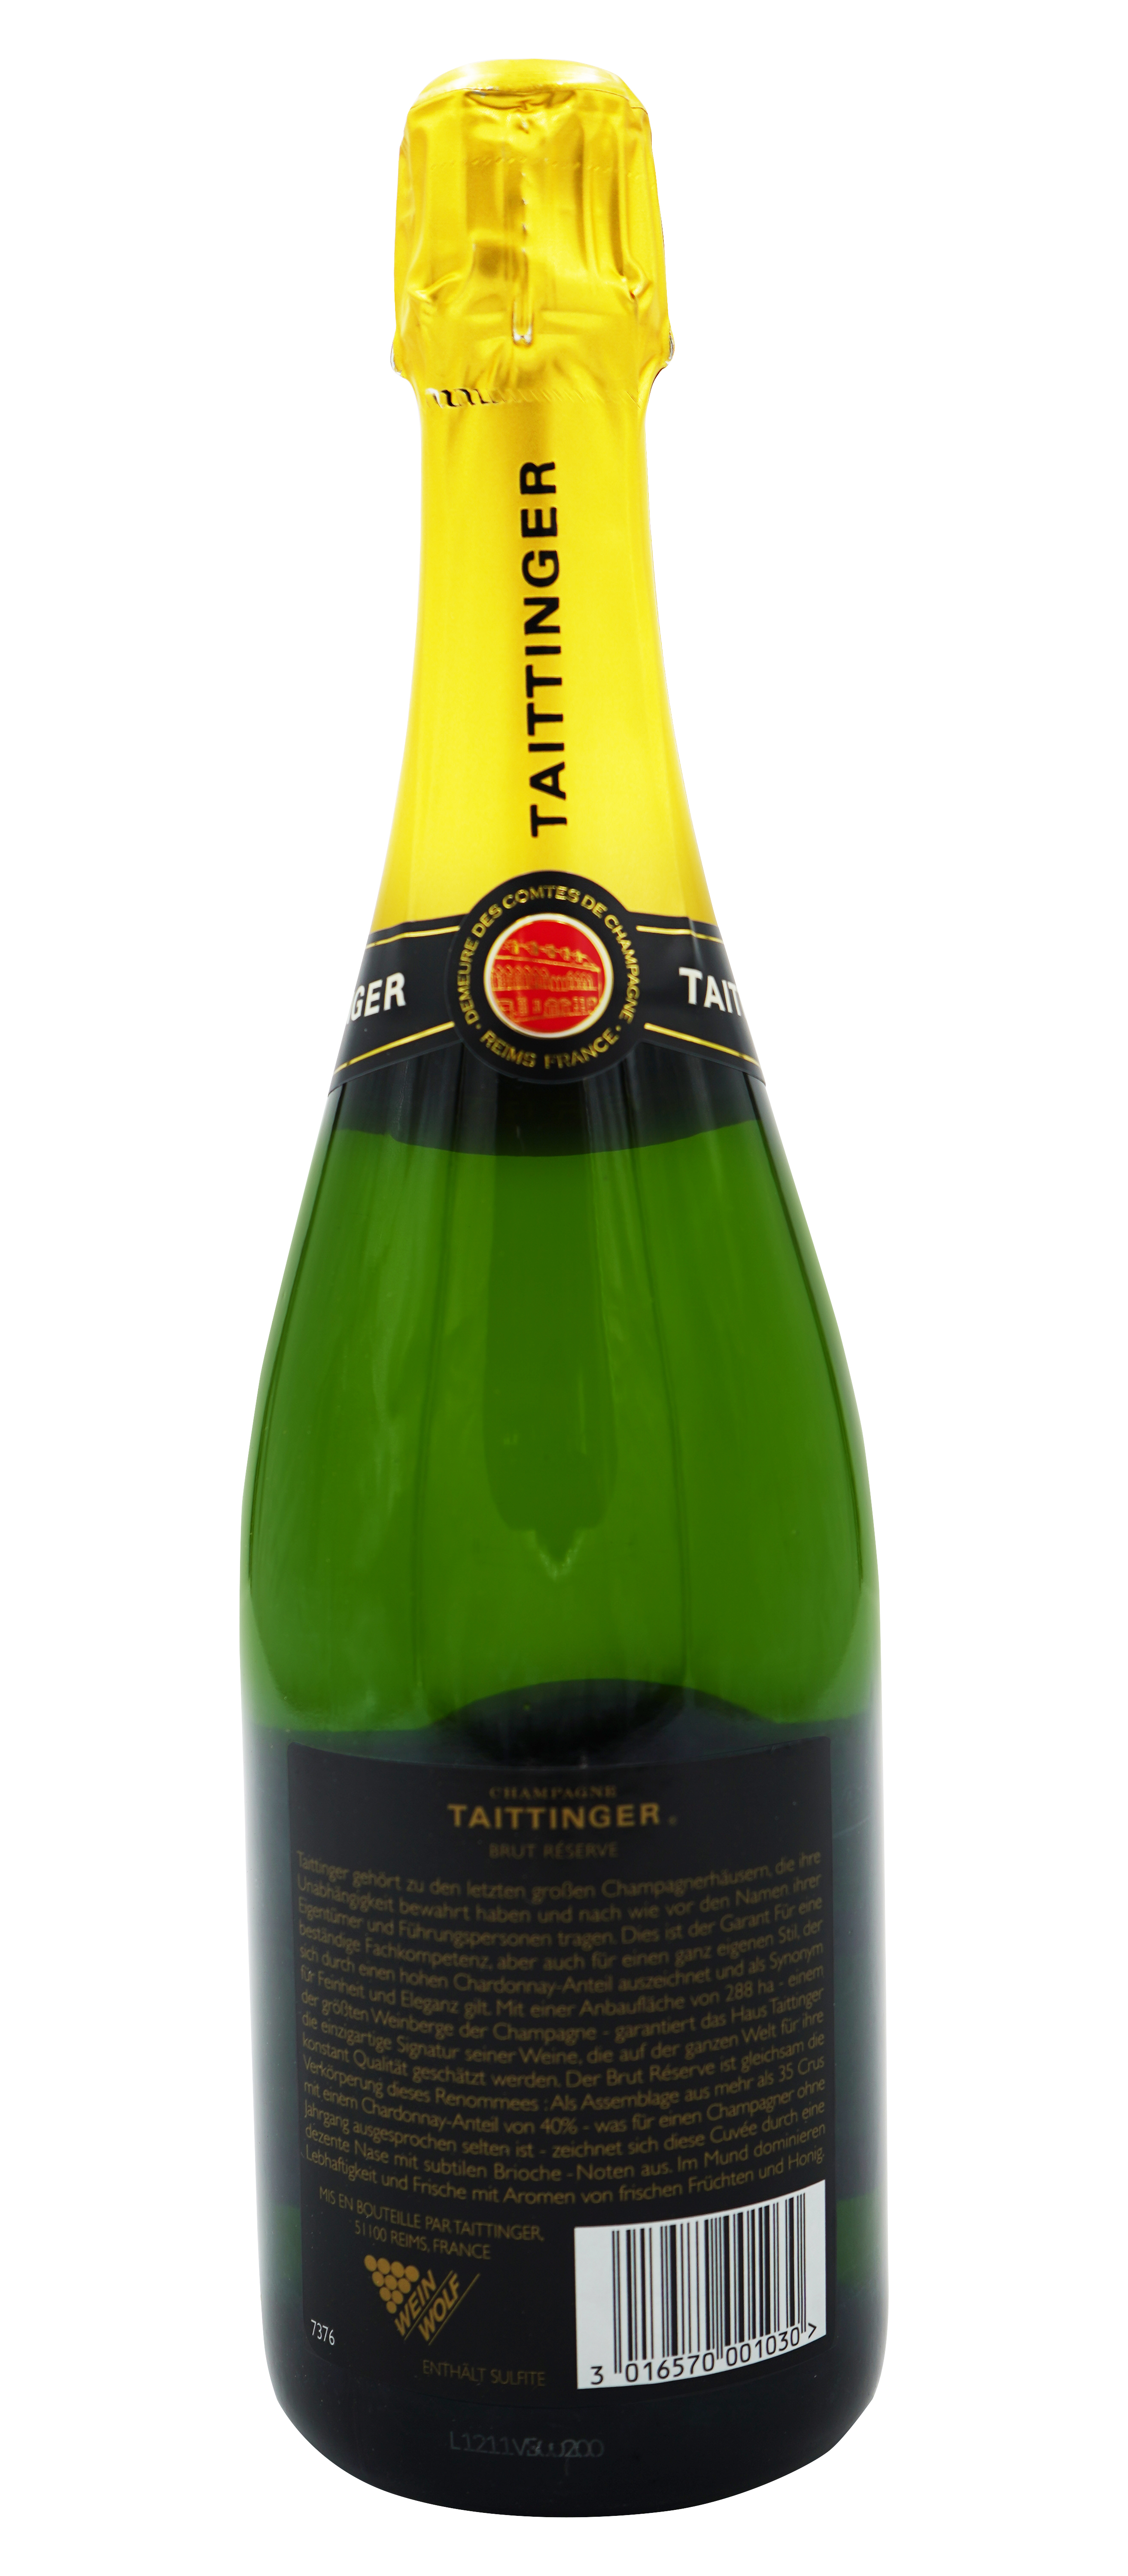 Taittinger Champagner Brut Reserve - back label